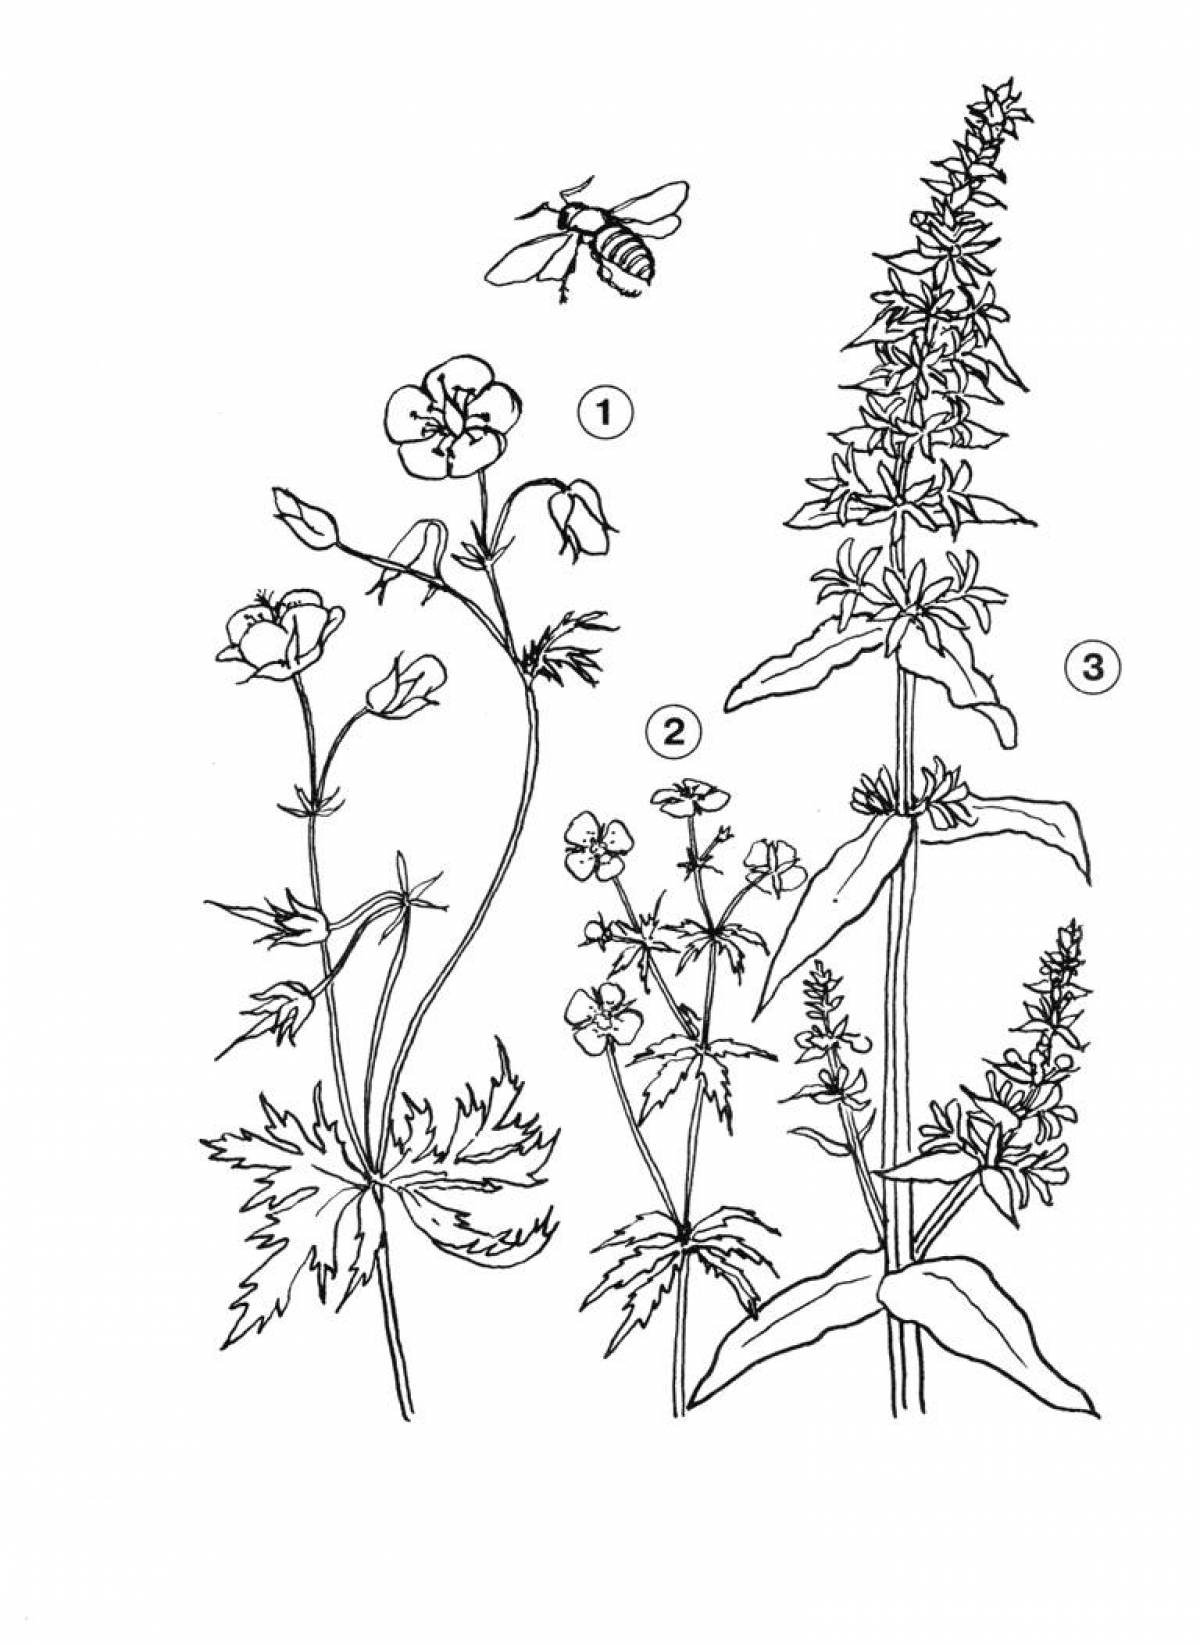 1. Meadow geranium 2. Kalgan 3. Loosestrife